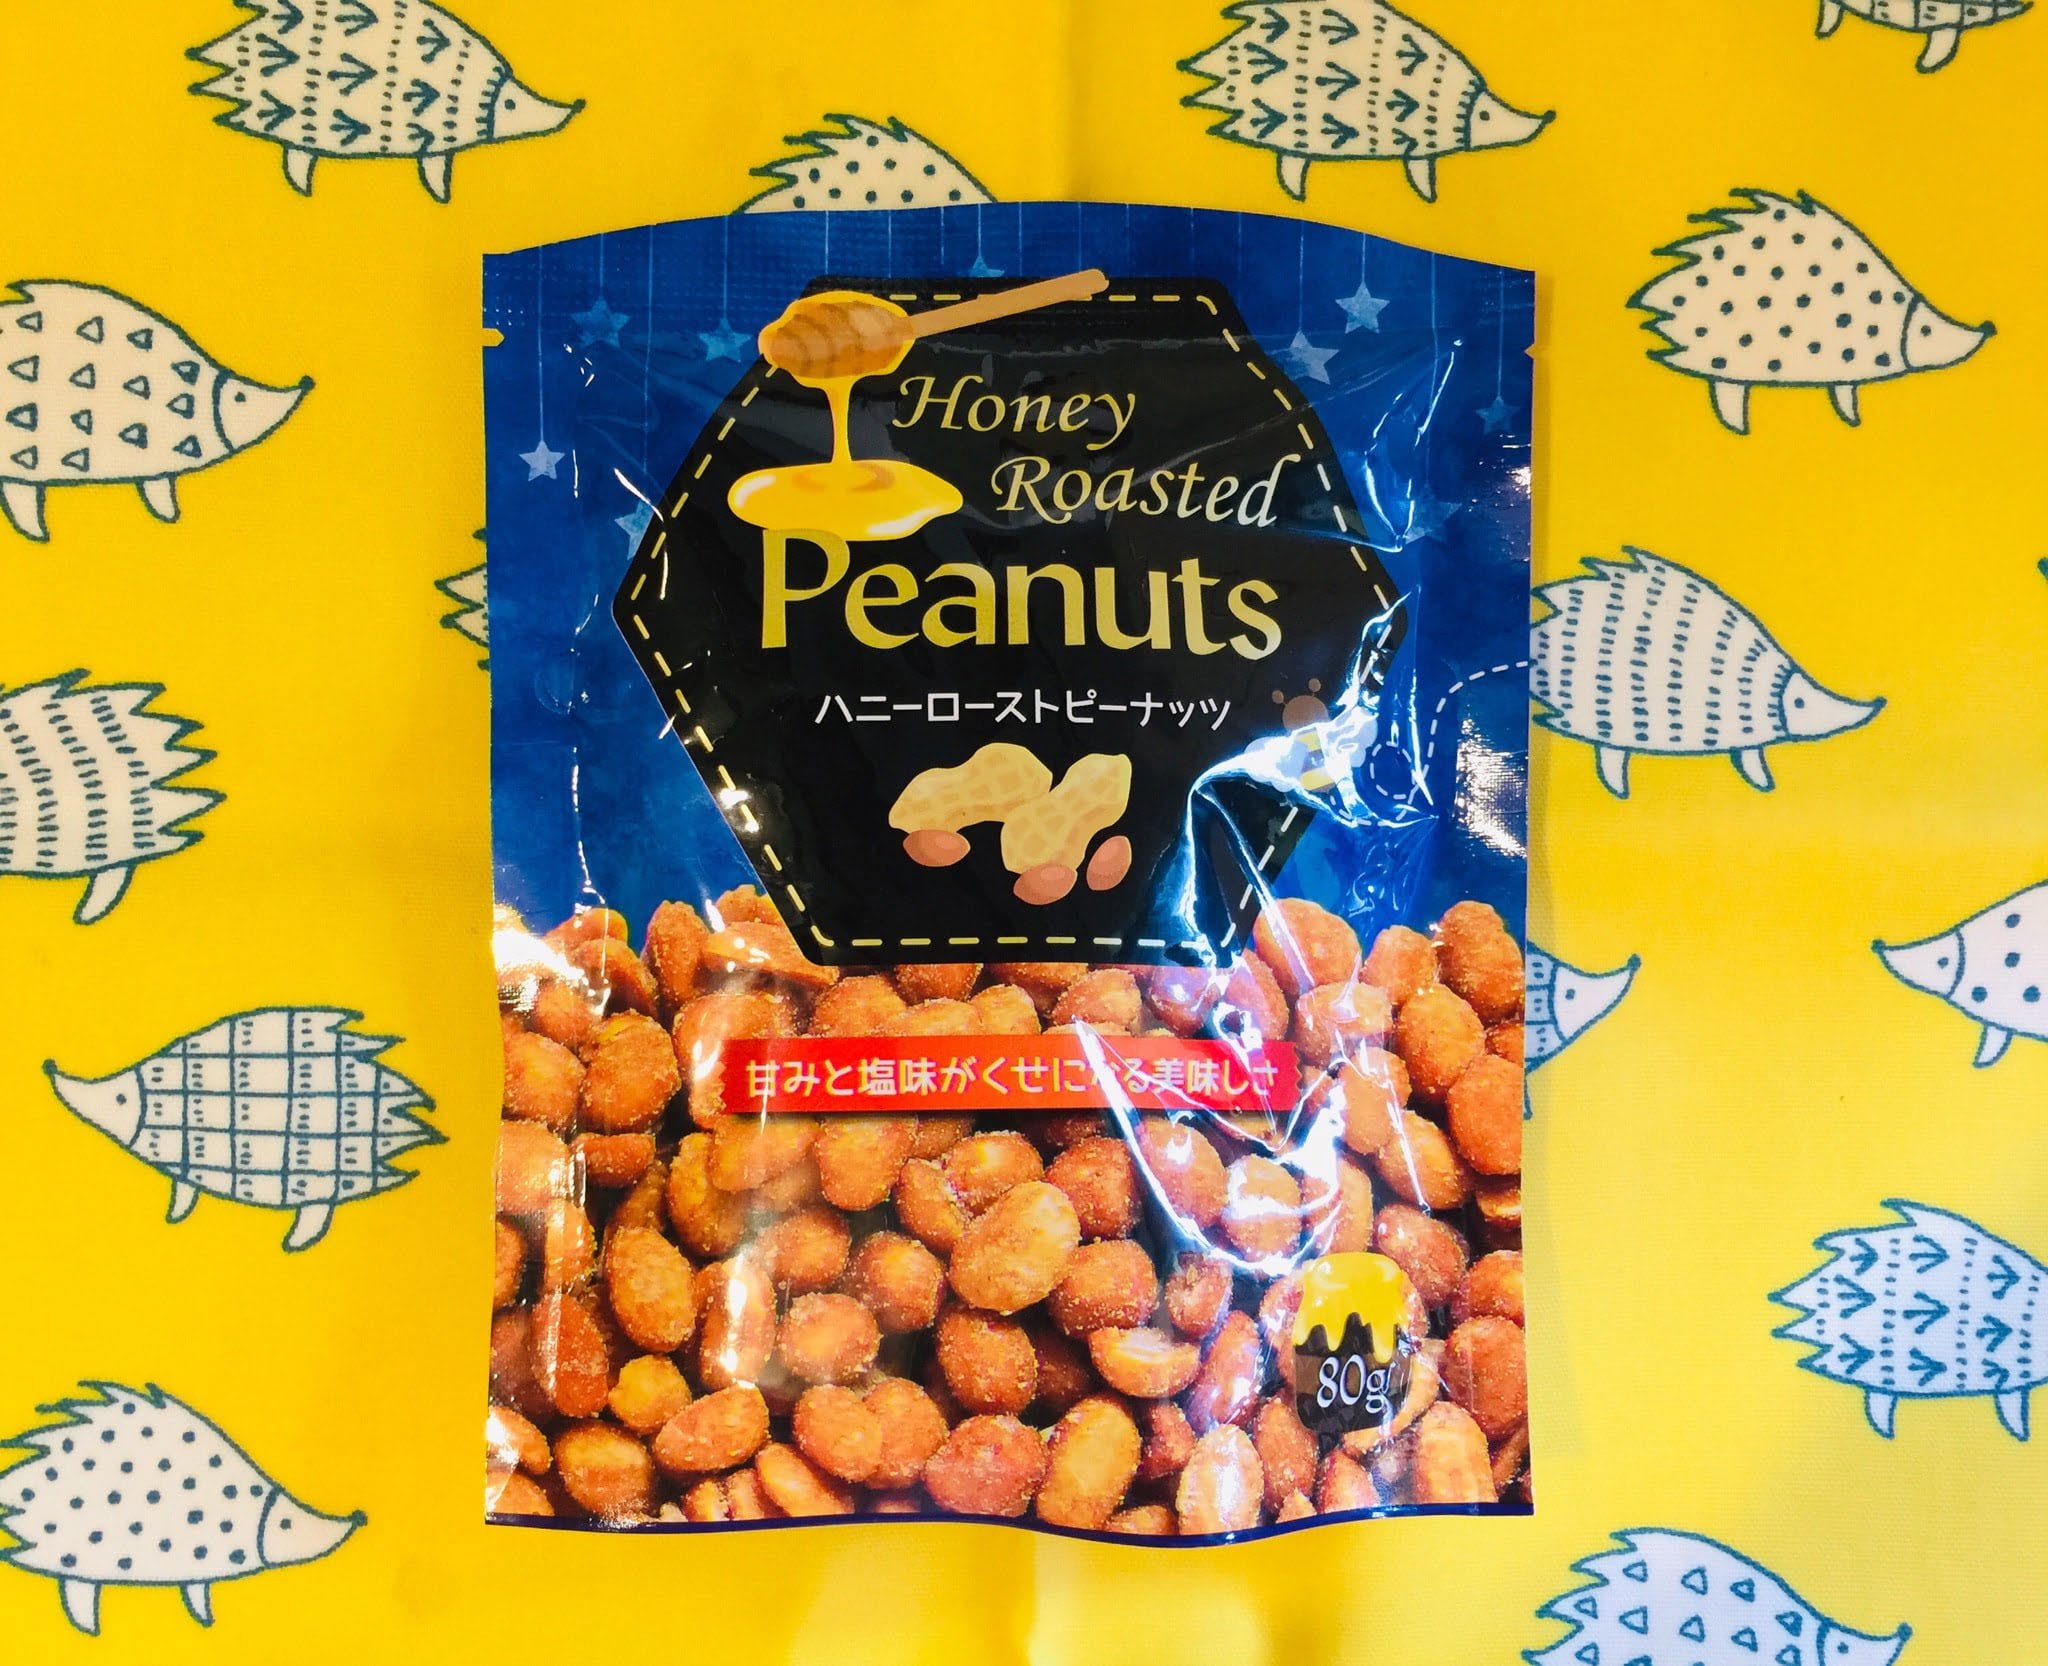 Japanese company needs to import honey-impregnated nuts